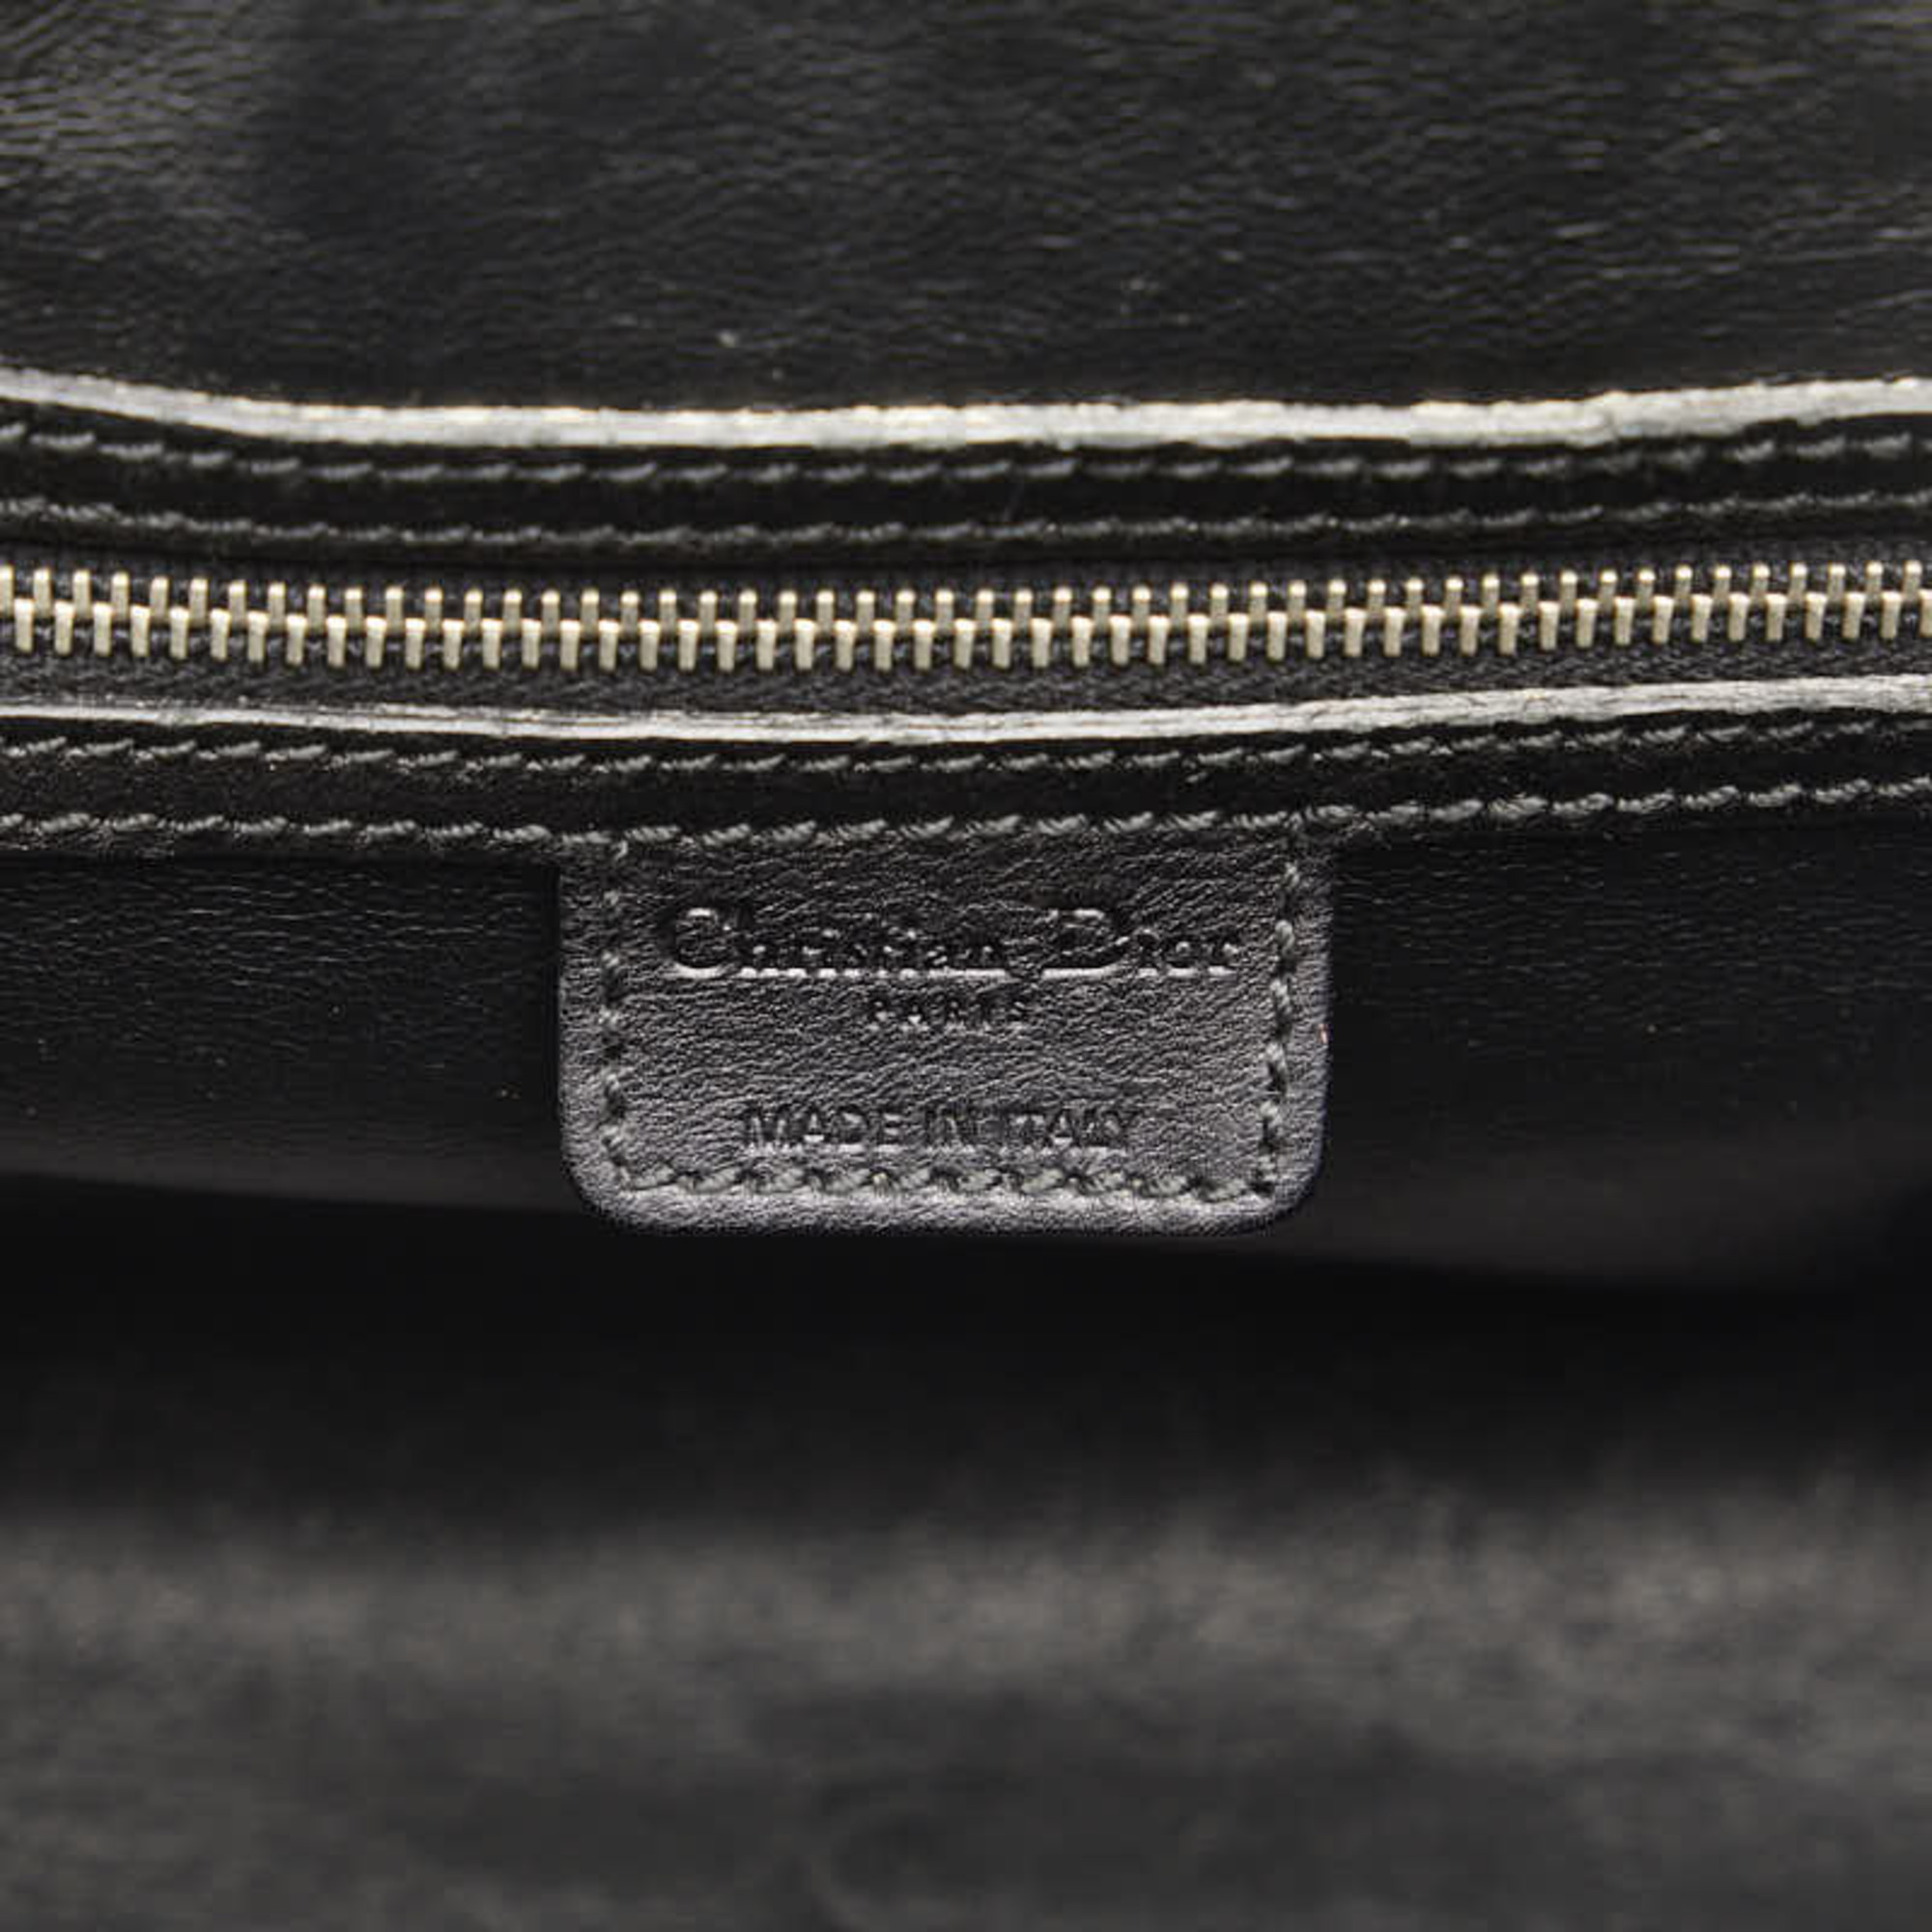 Christian Dior Dior handbag black leather women's